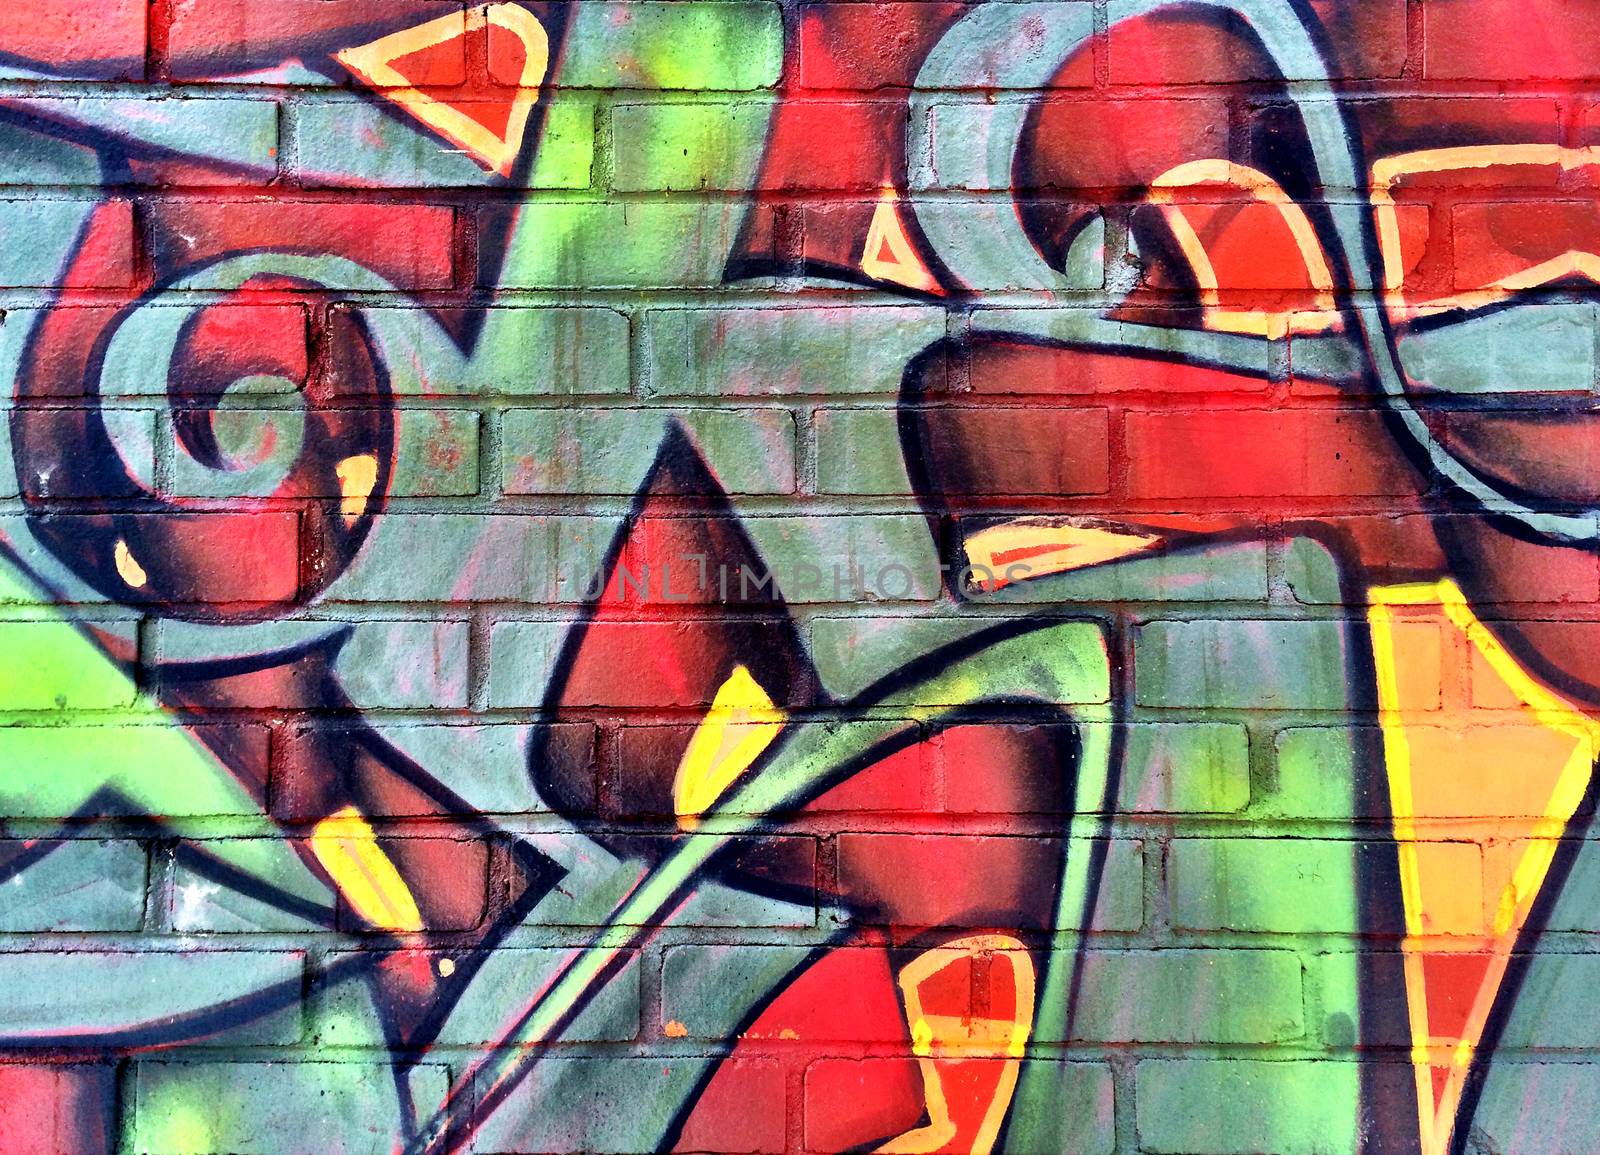 Colorful graffiti detail on a brick wall by anikasalsera